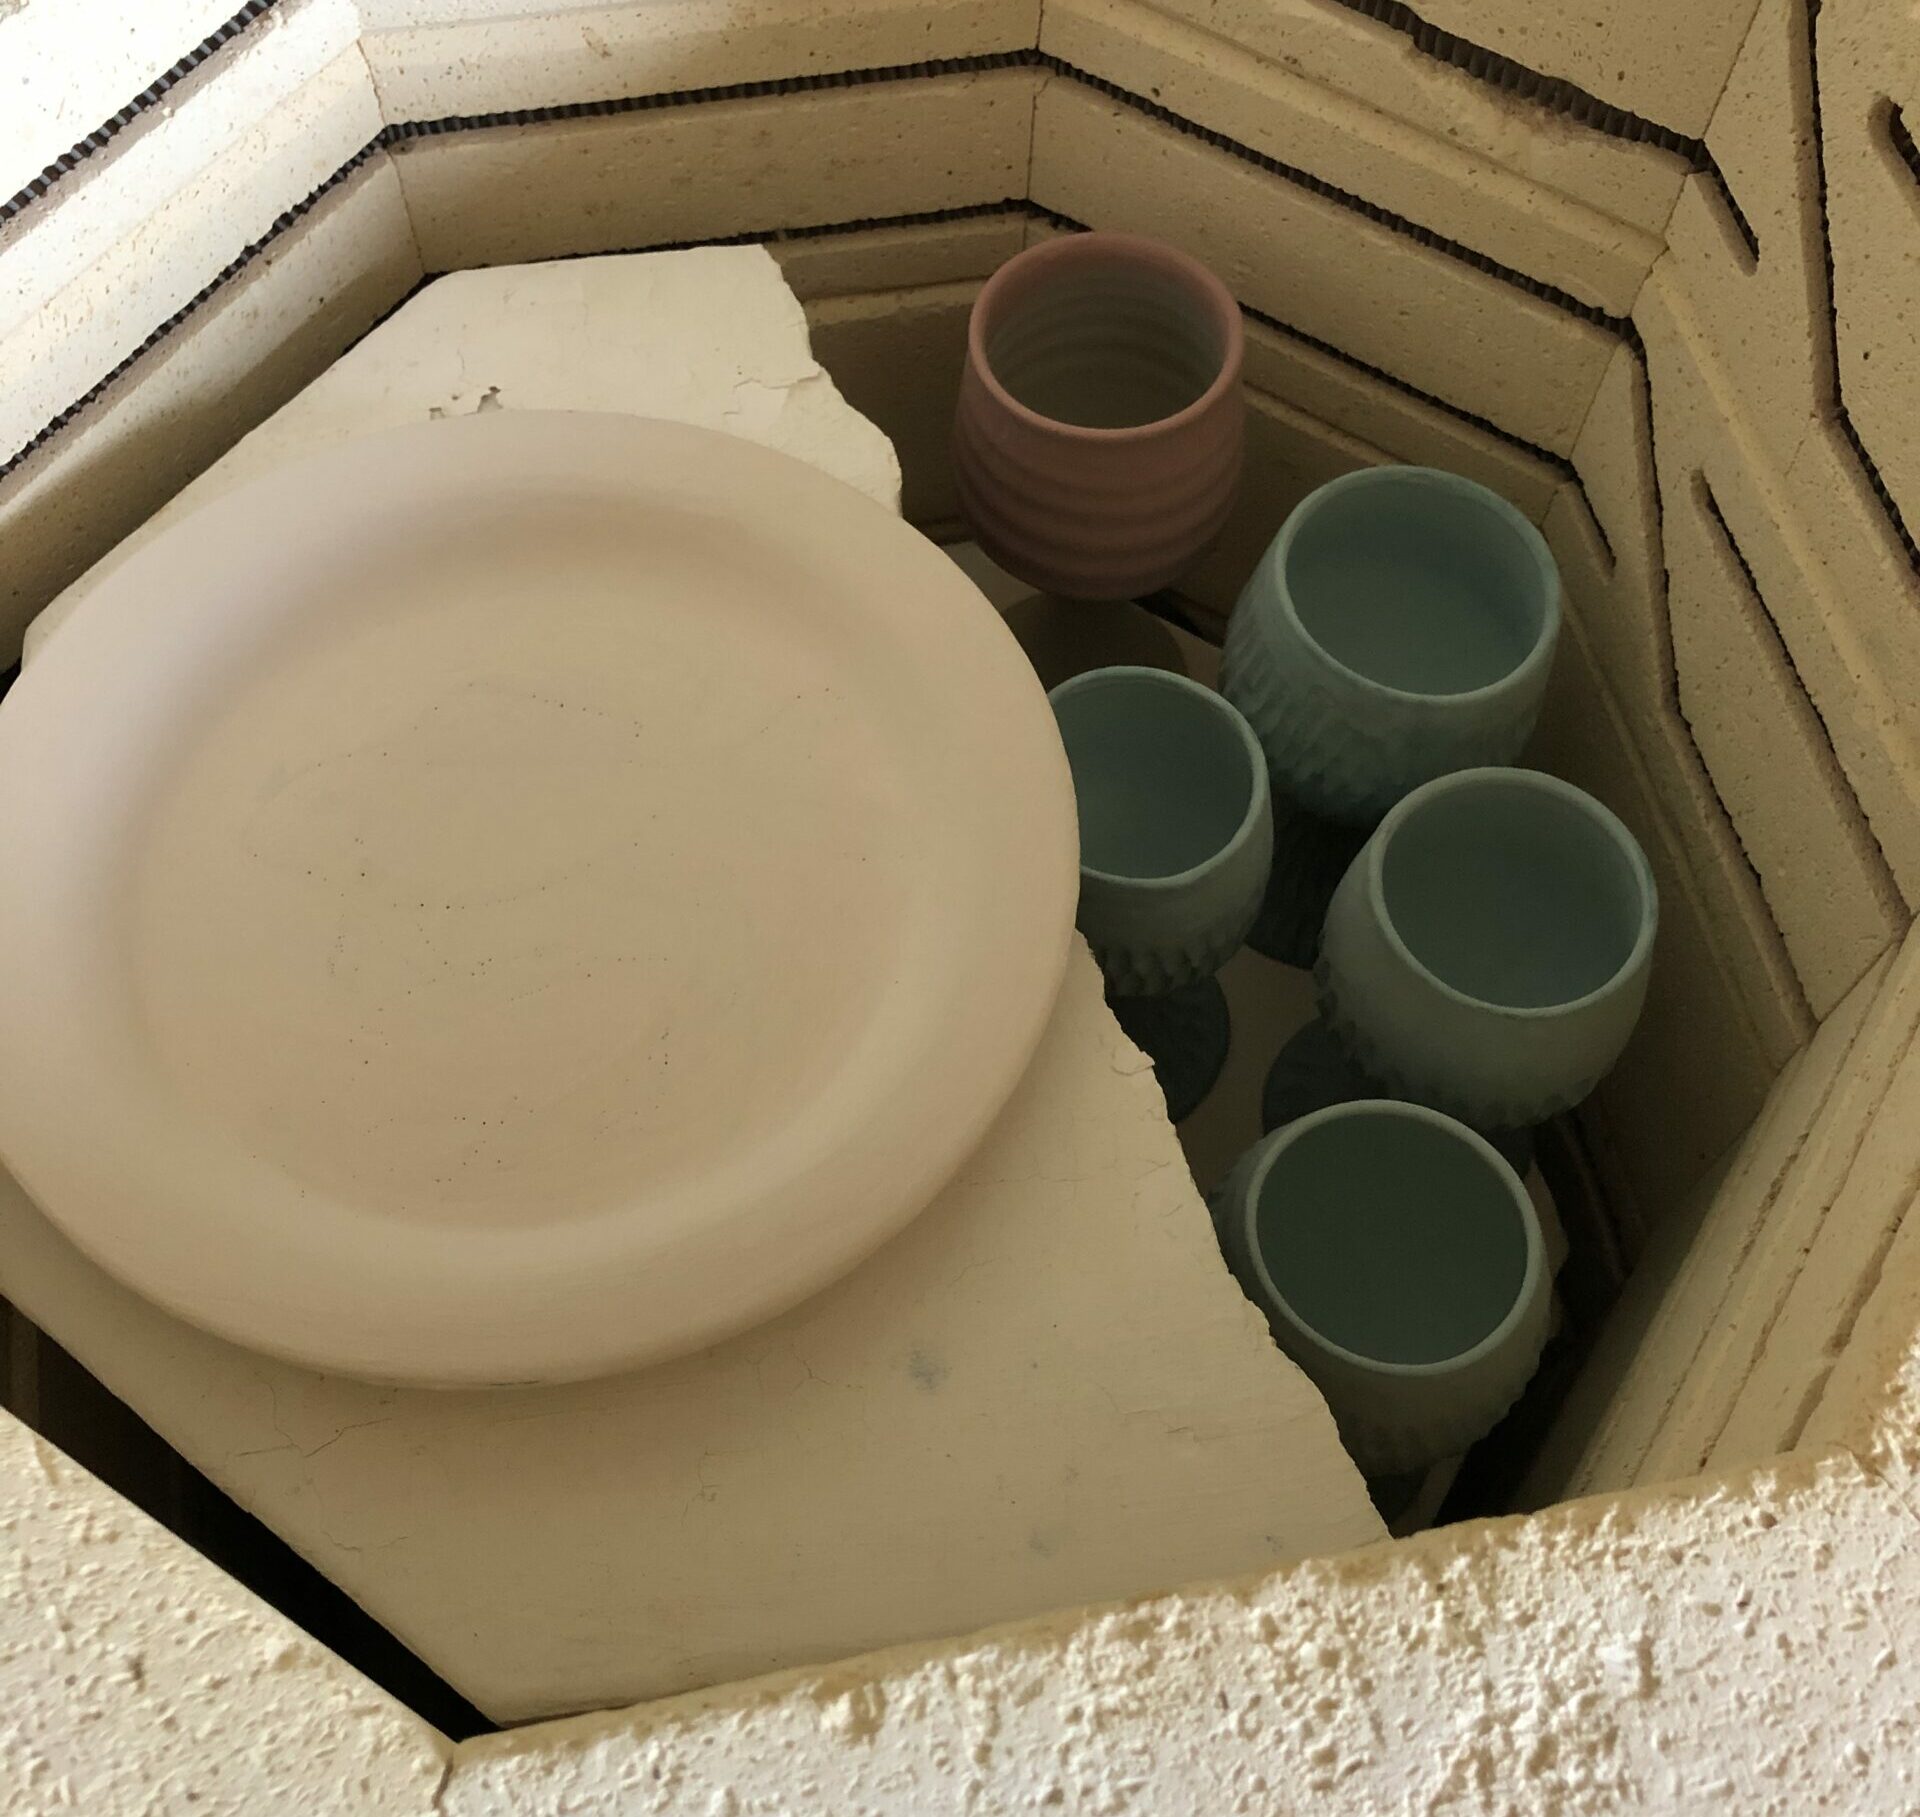 inside the ceramics kiln